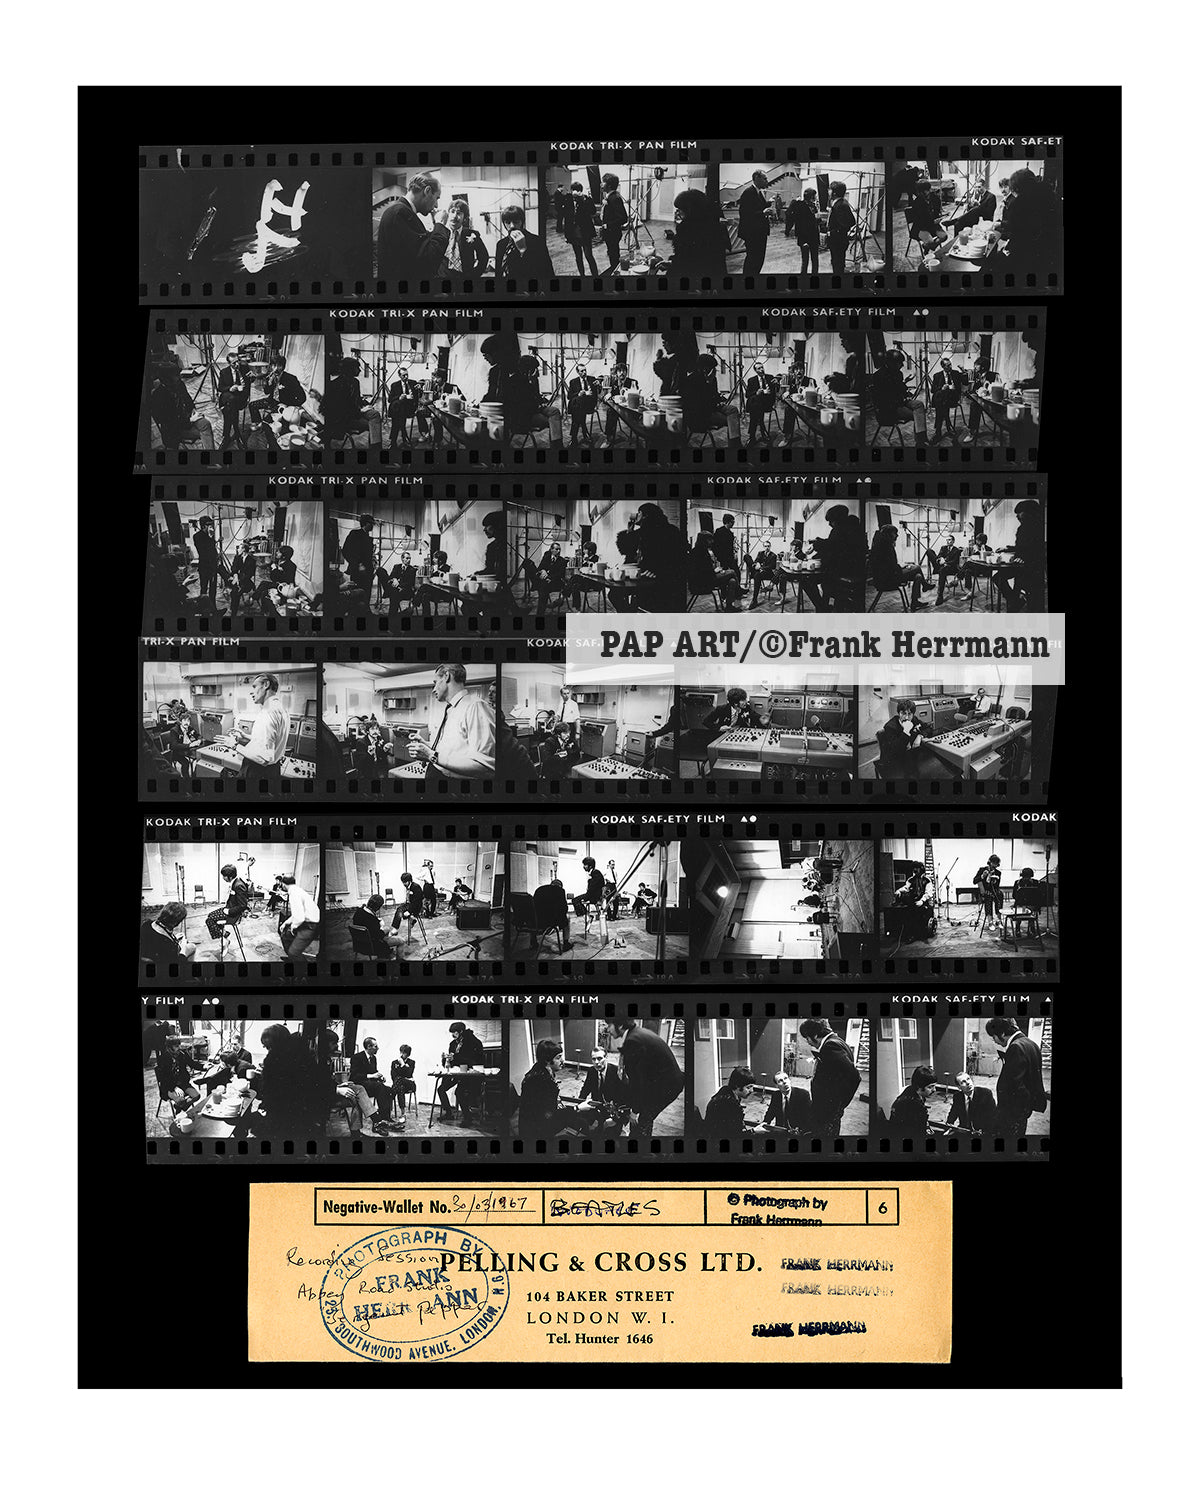 Beatles Contact Sheet 'Lost' , Abbey Road Studios, March 30th , 1967 (MEDIUM)